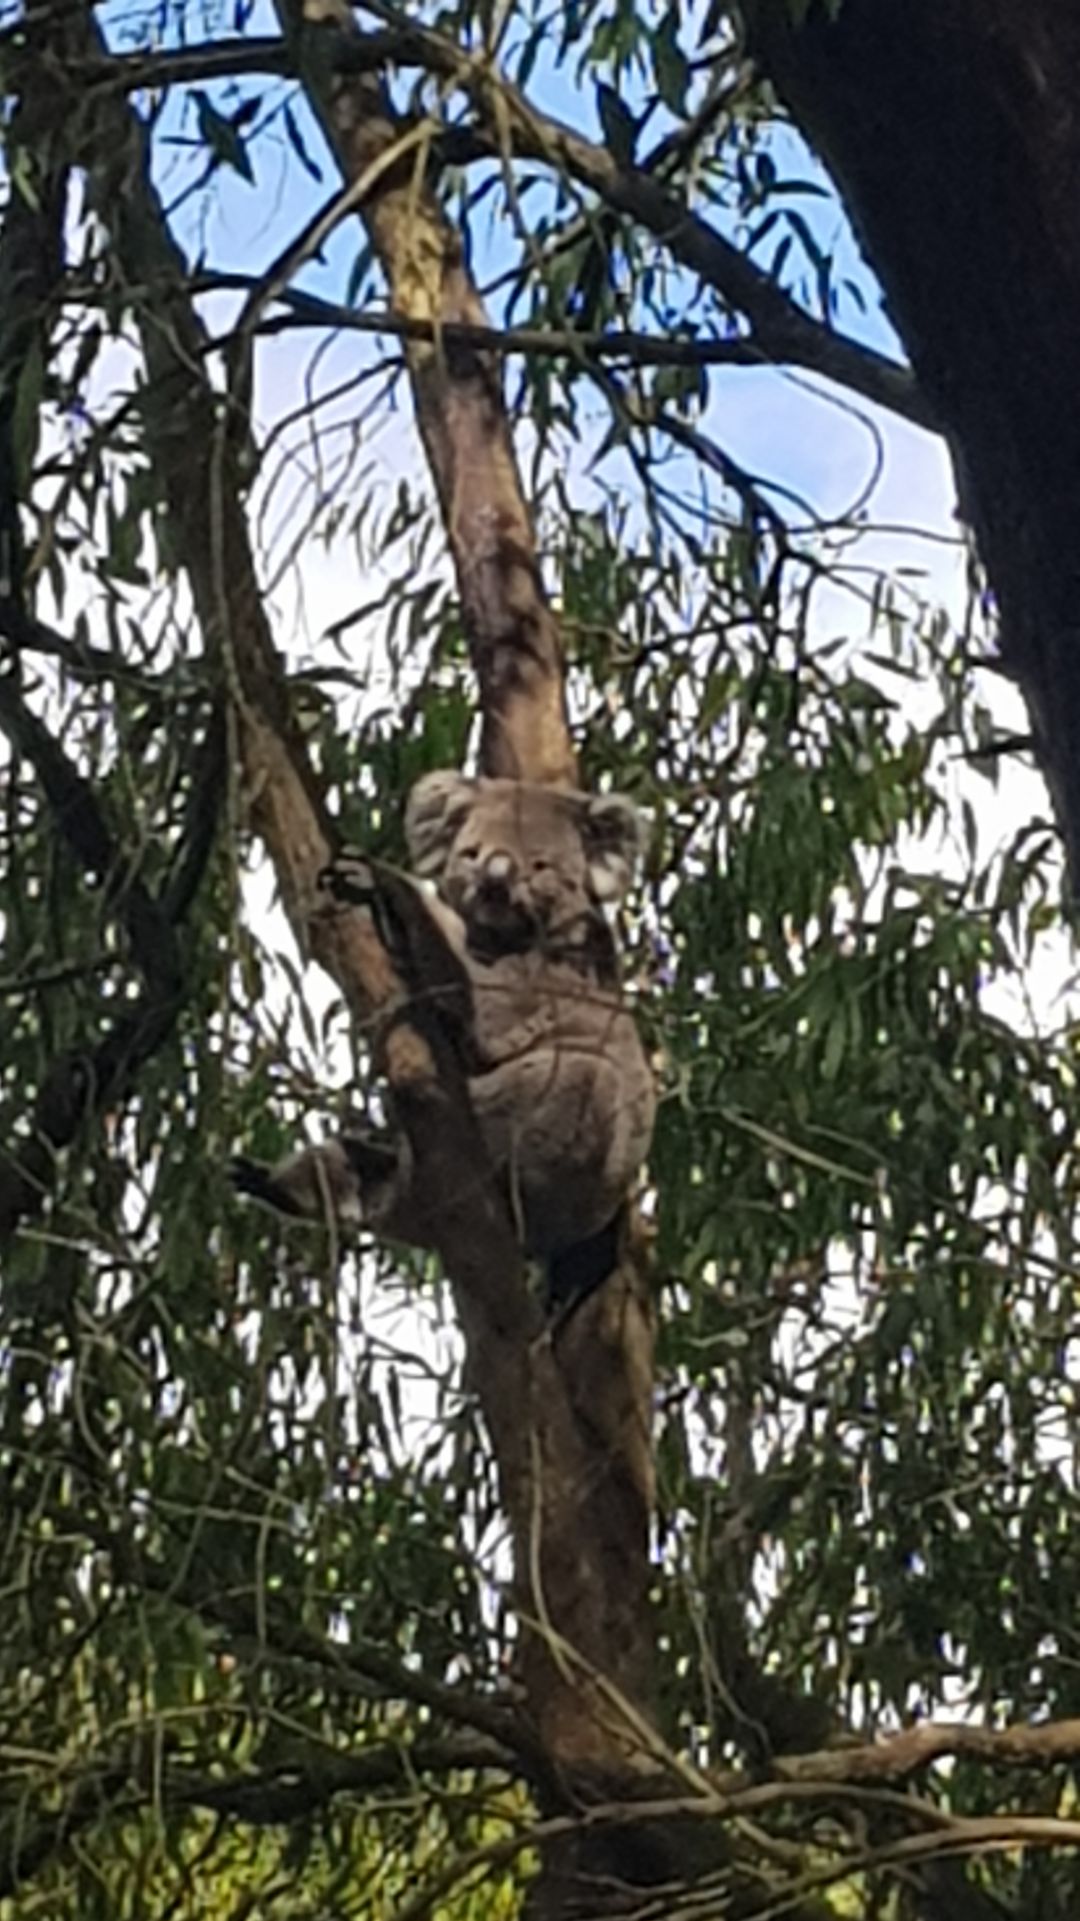 Photo of a koala in a eucalyptus tree on Bunurong Country. Photo by R. Weekes